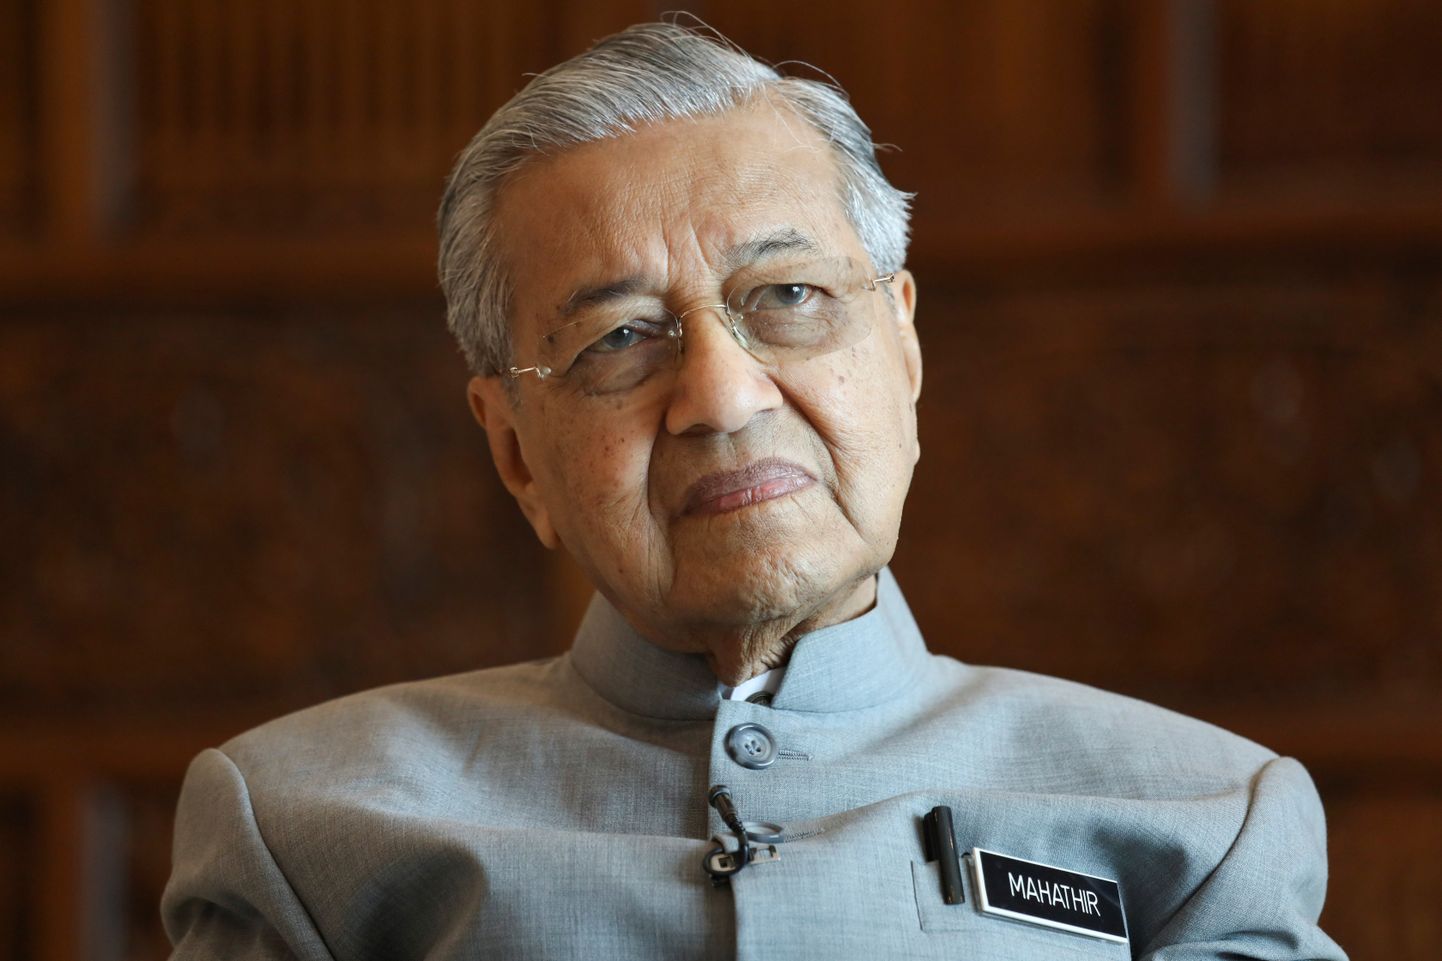 Malaisia 94-aastane peaminister Mahathir Mohamad.